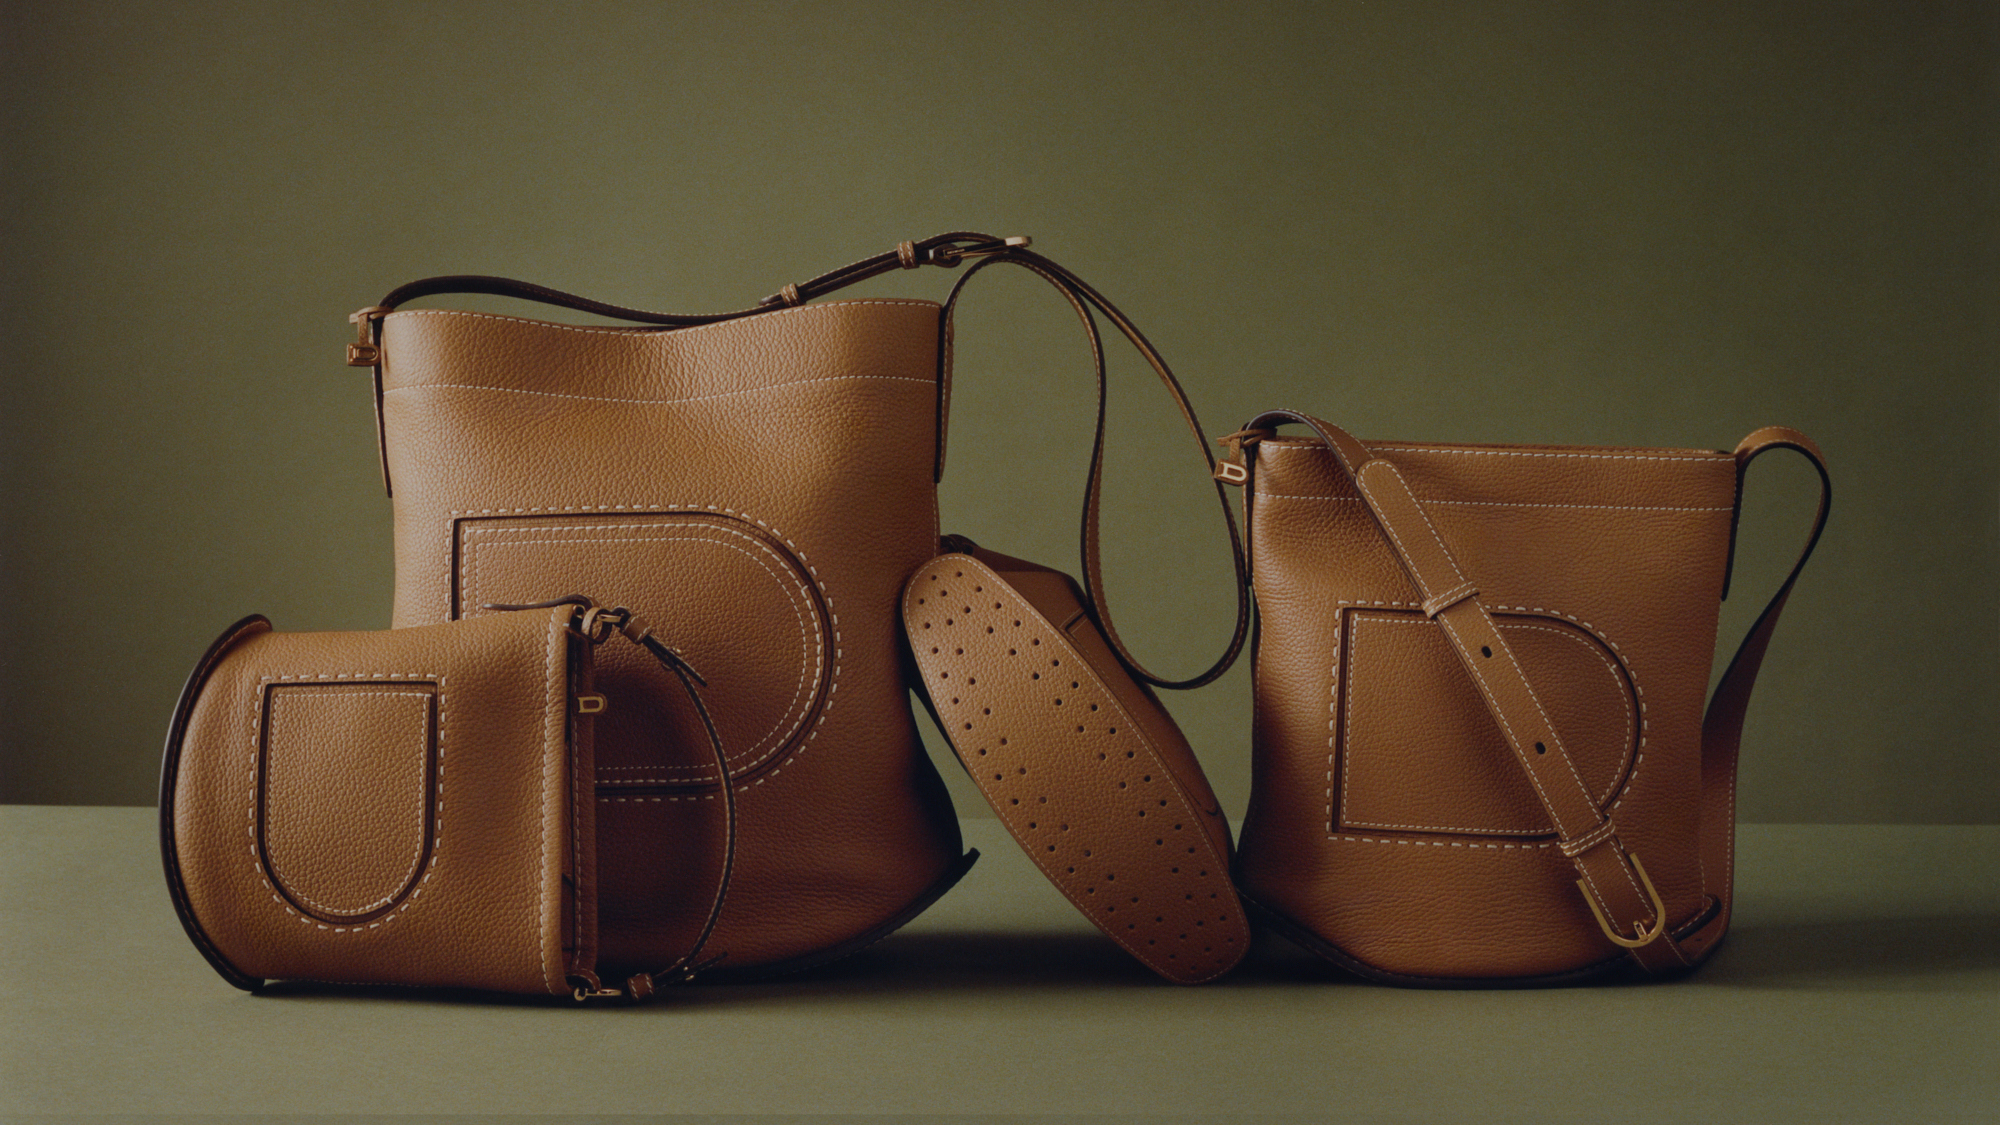 DELVAUX Bag Handbag Tote Calf Leather Women's Black w/ storage bags | eBay